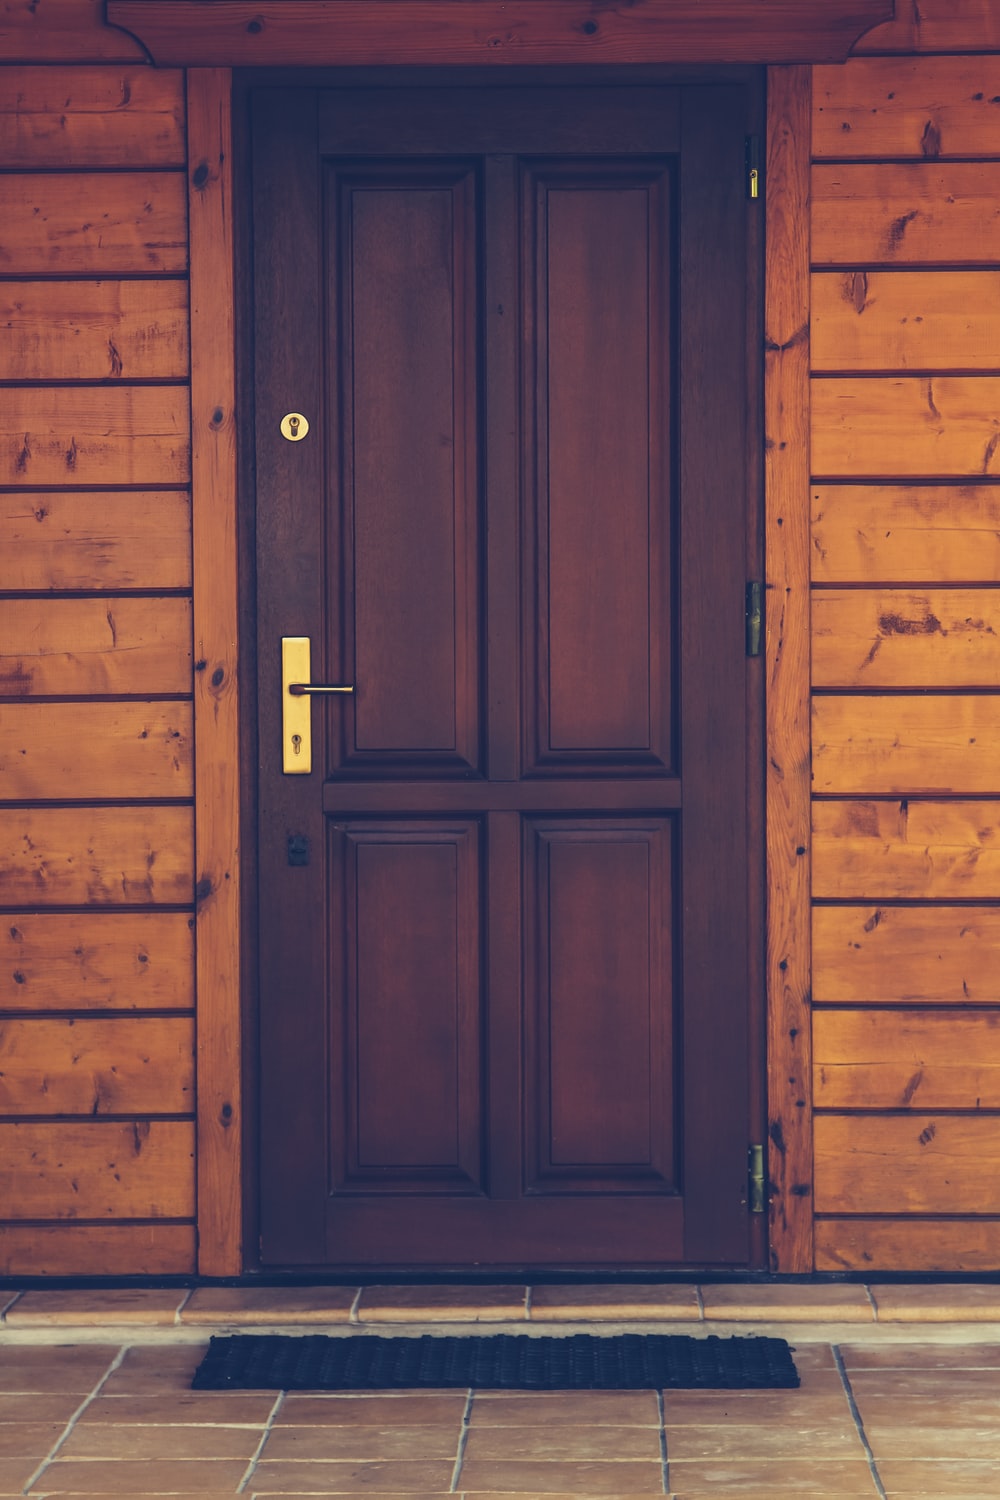 Wooden Doors Picture. Download Free Image